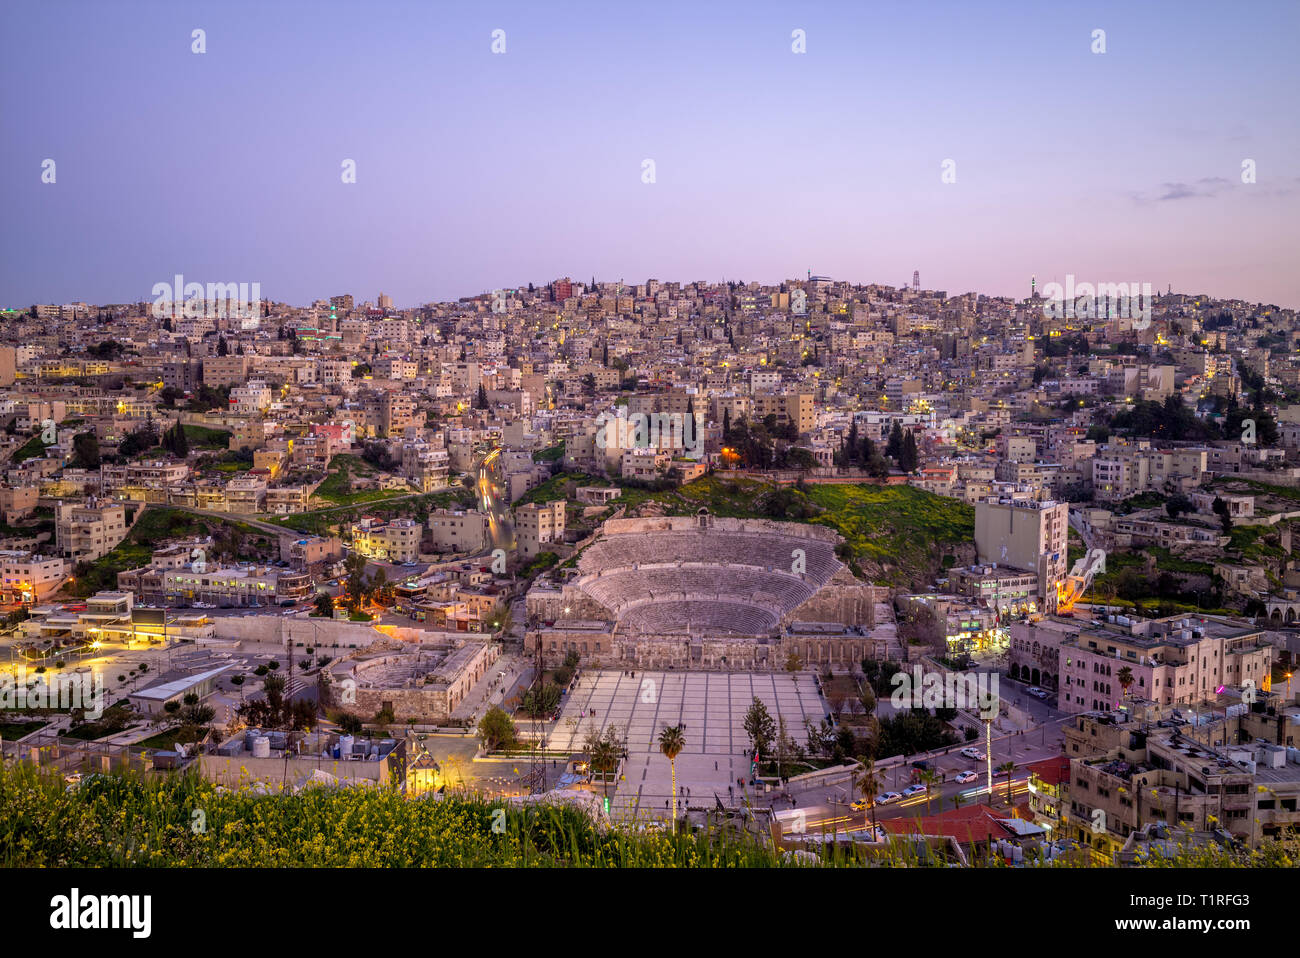 skyline of Amman, capital of Jordan, at night Stock Photo